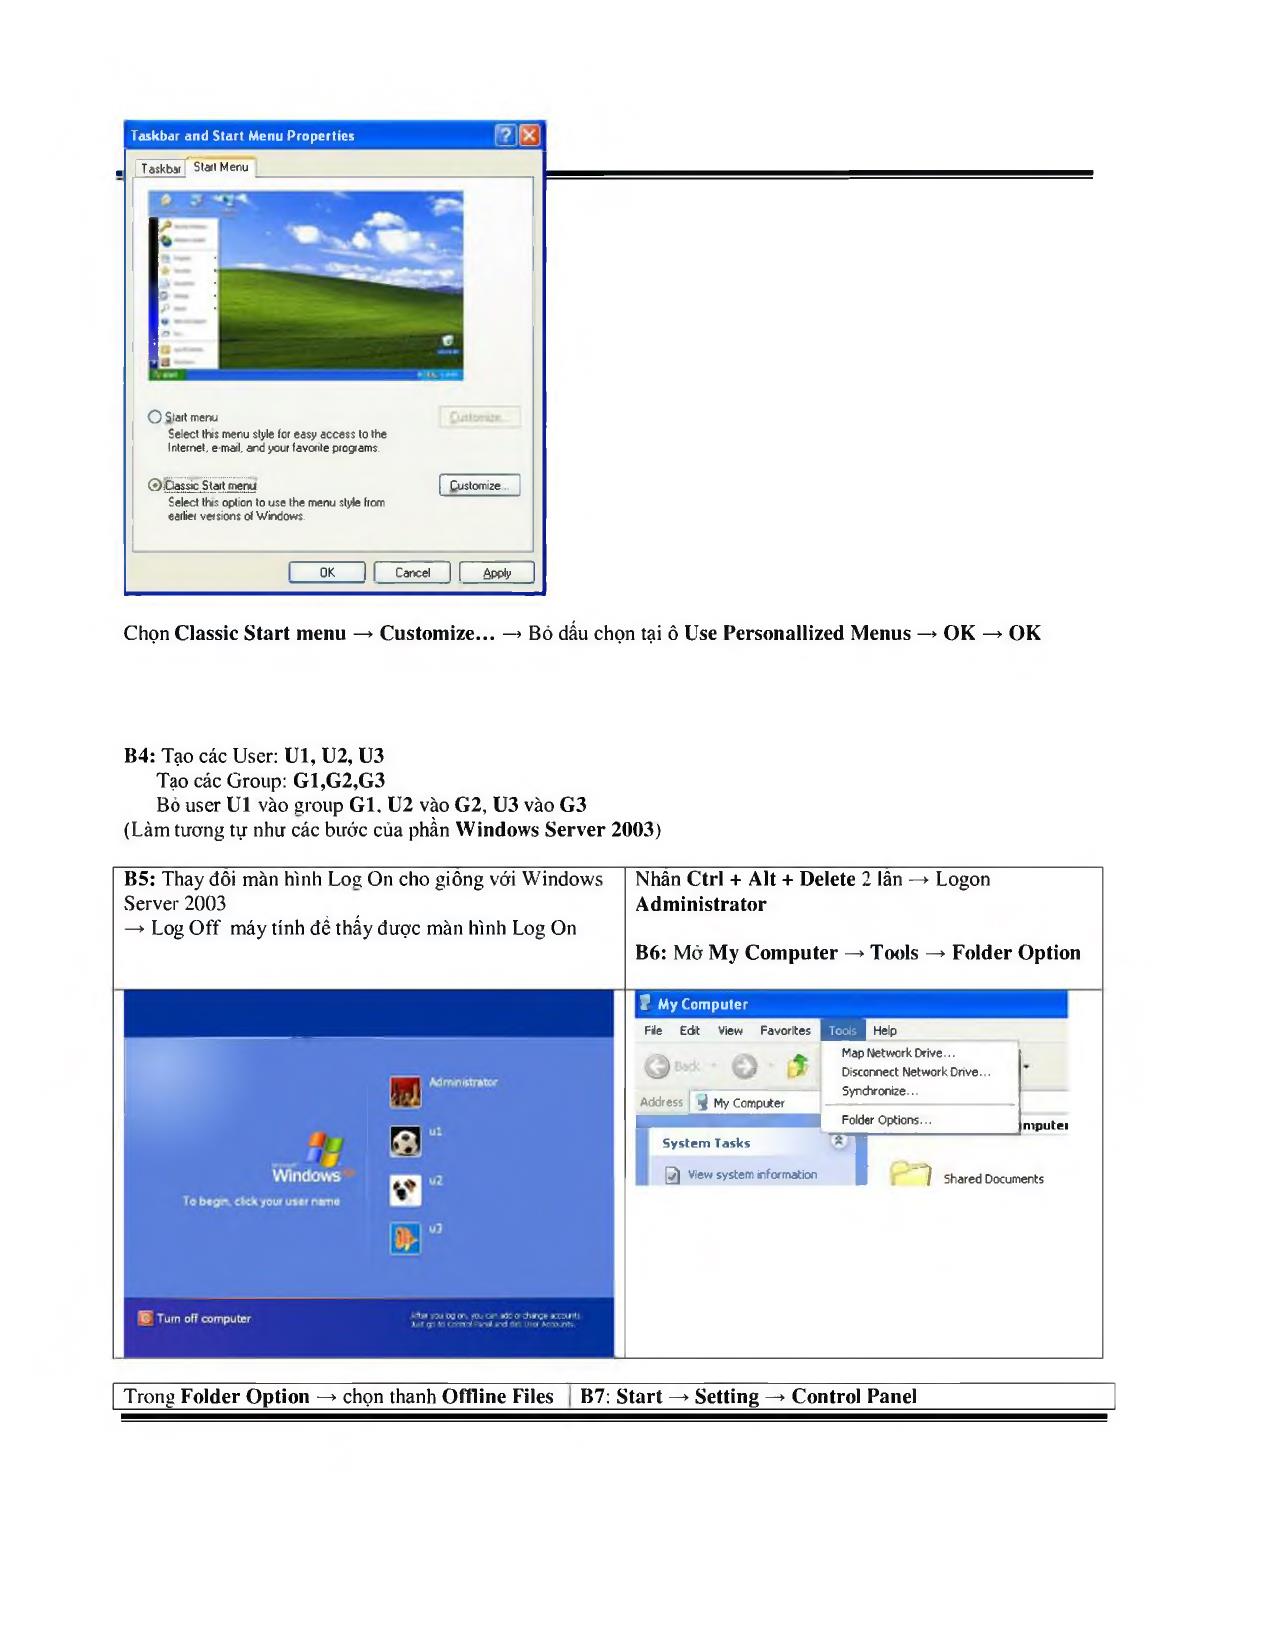 Windows Server 2003 trang 5